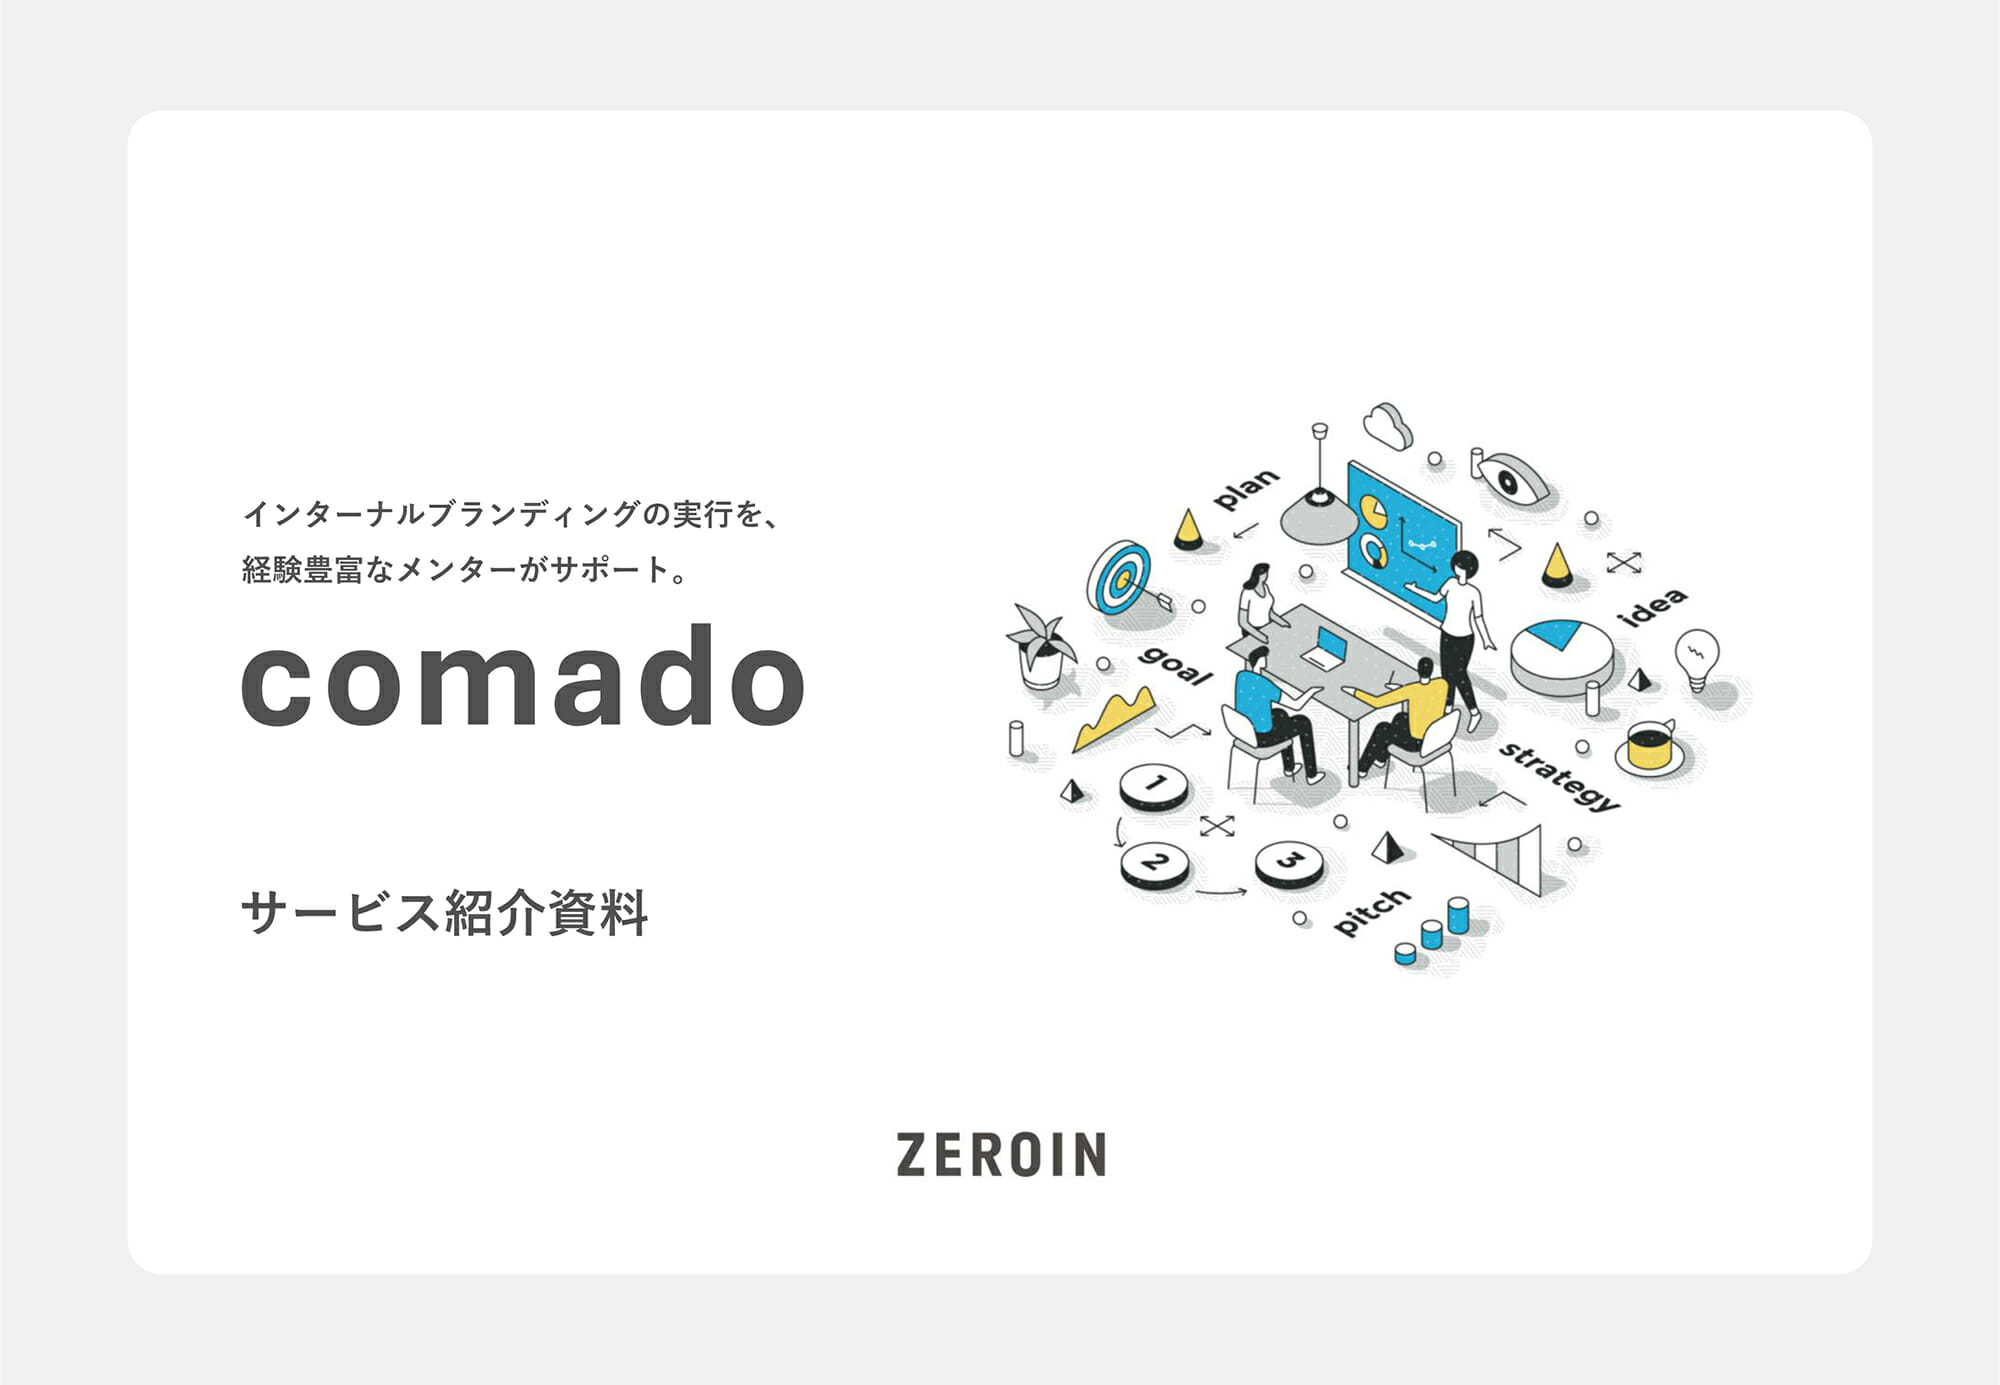 『comado』インナーブランディングメンターサービスの資料イメージ